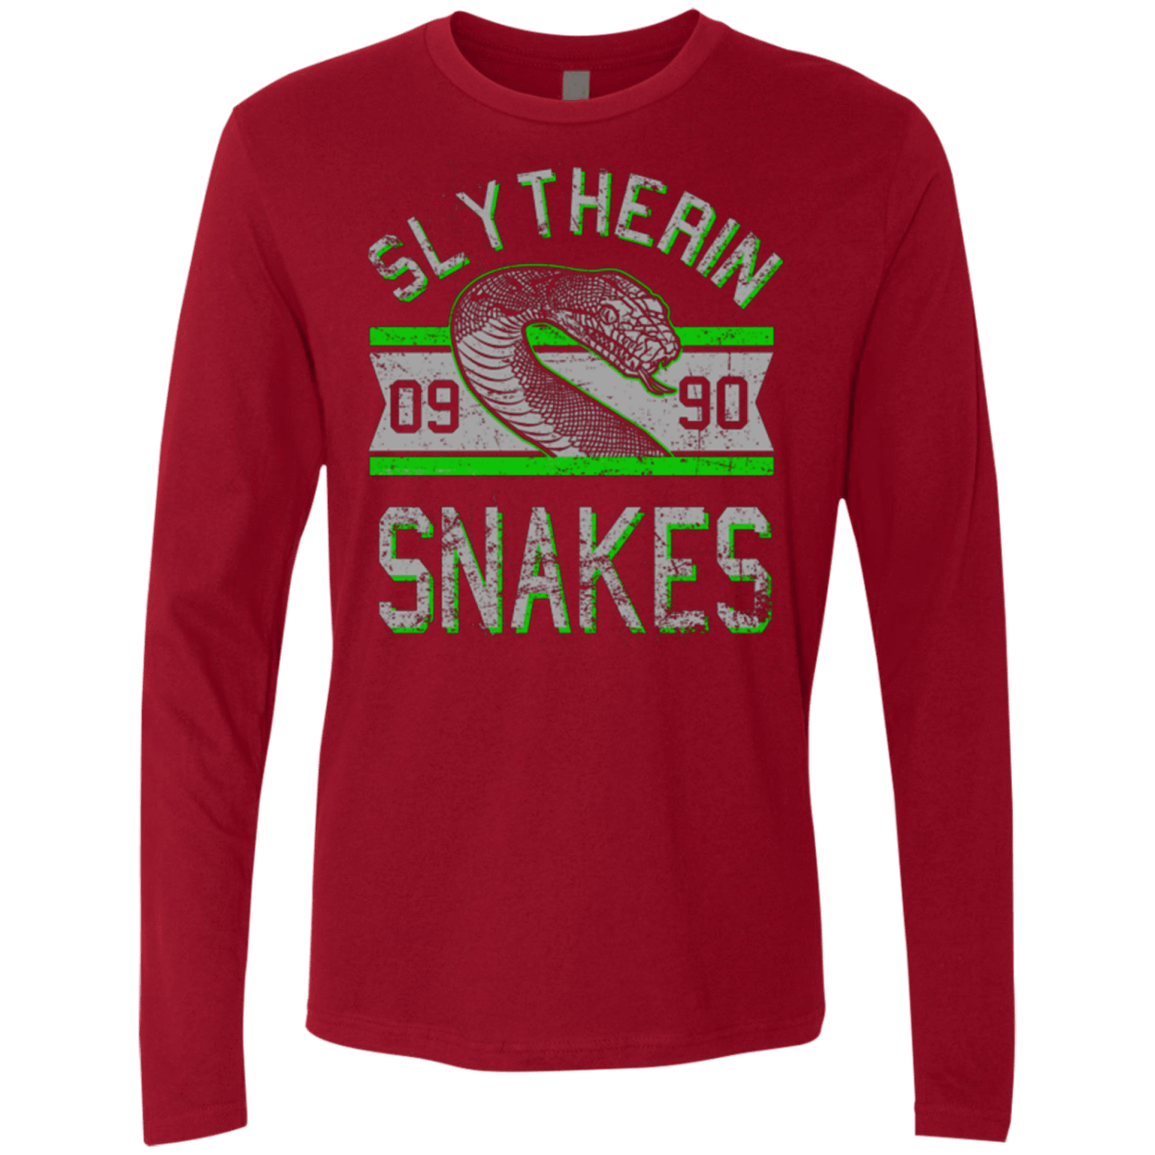 T-Shirts Cardinal / Small Snakes Men's Premium Long Sleeve